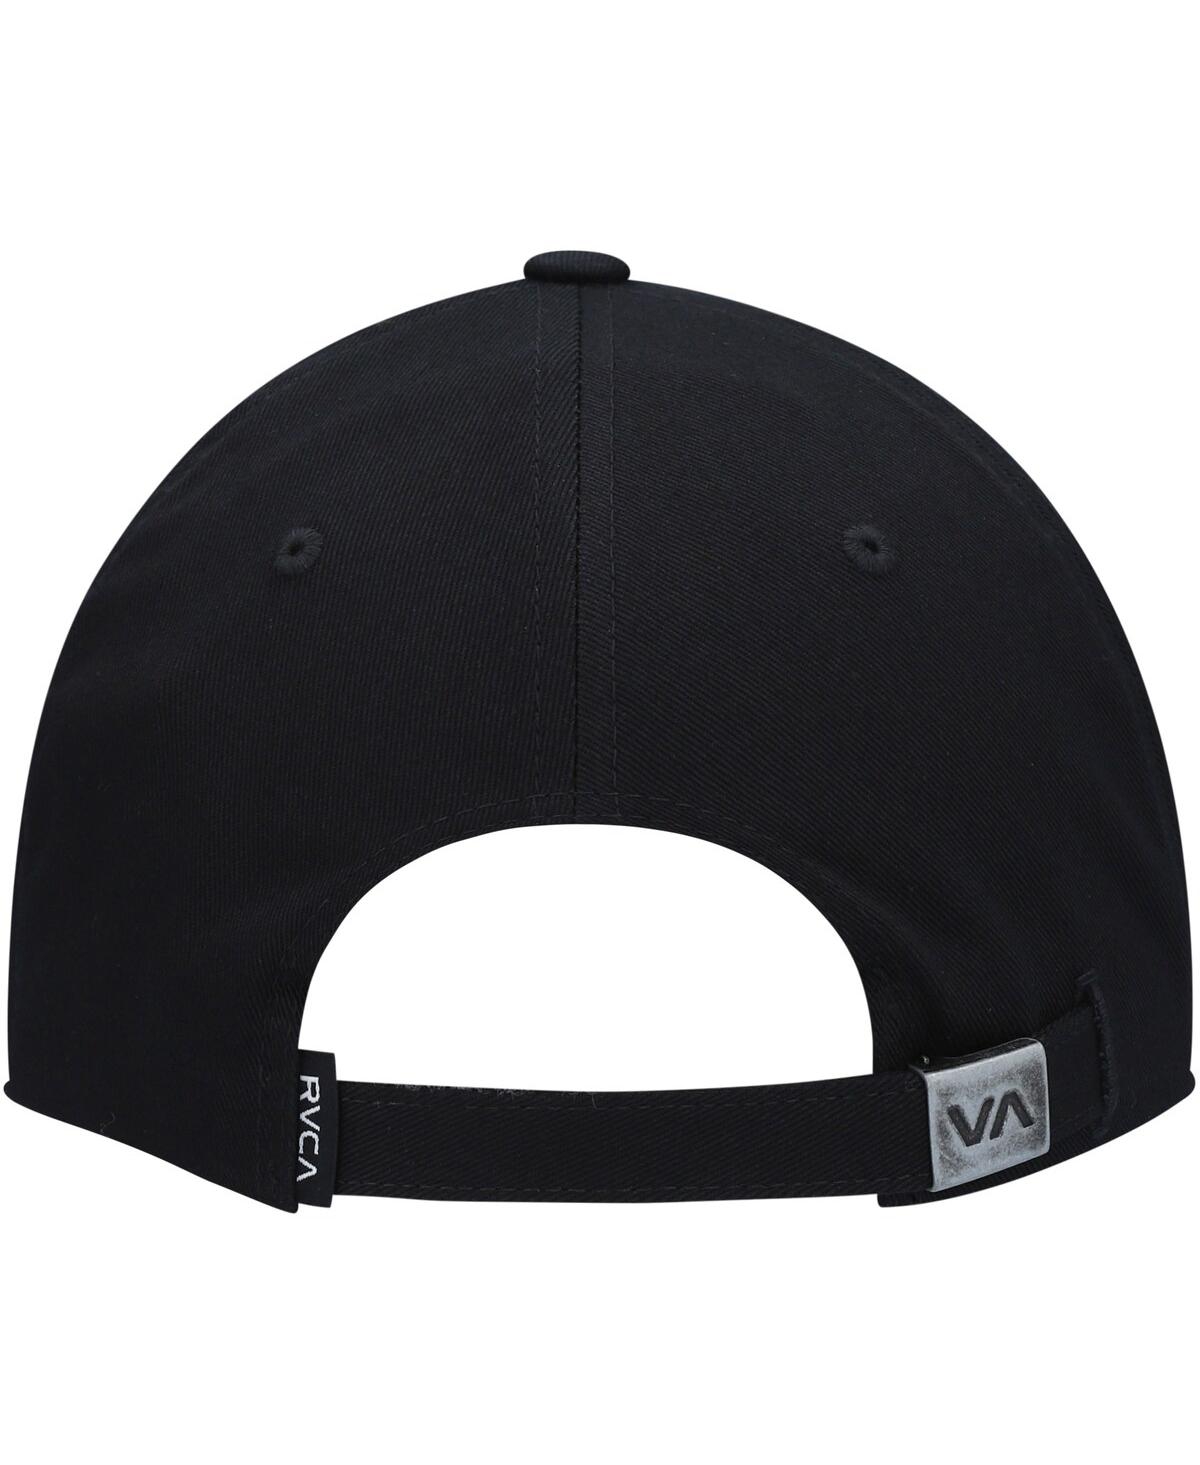 Shop Rvca Men's  Black Bill Connors Adjustable Hat